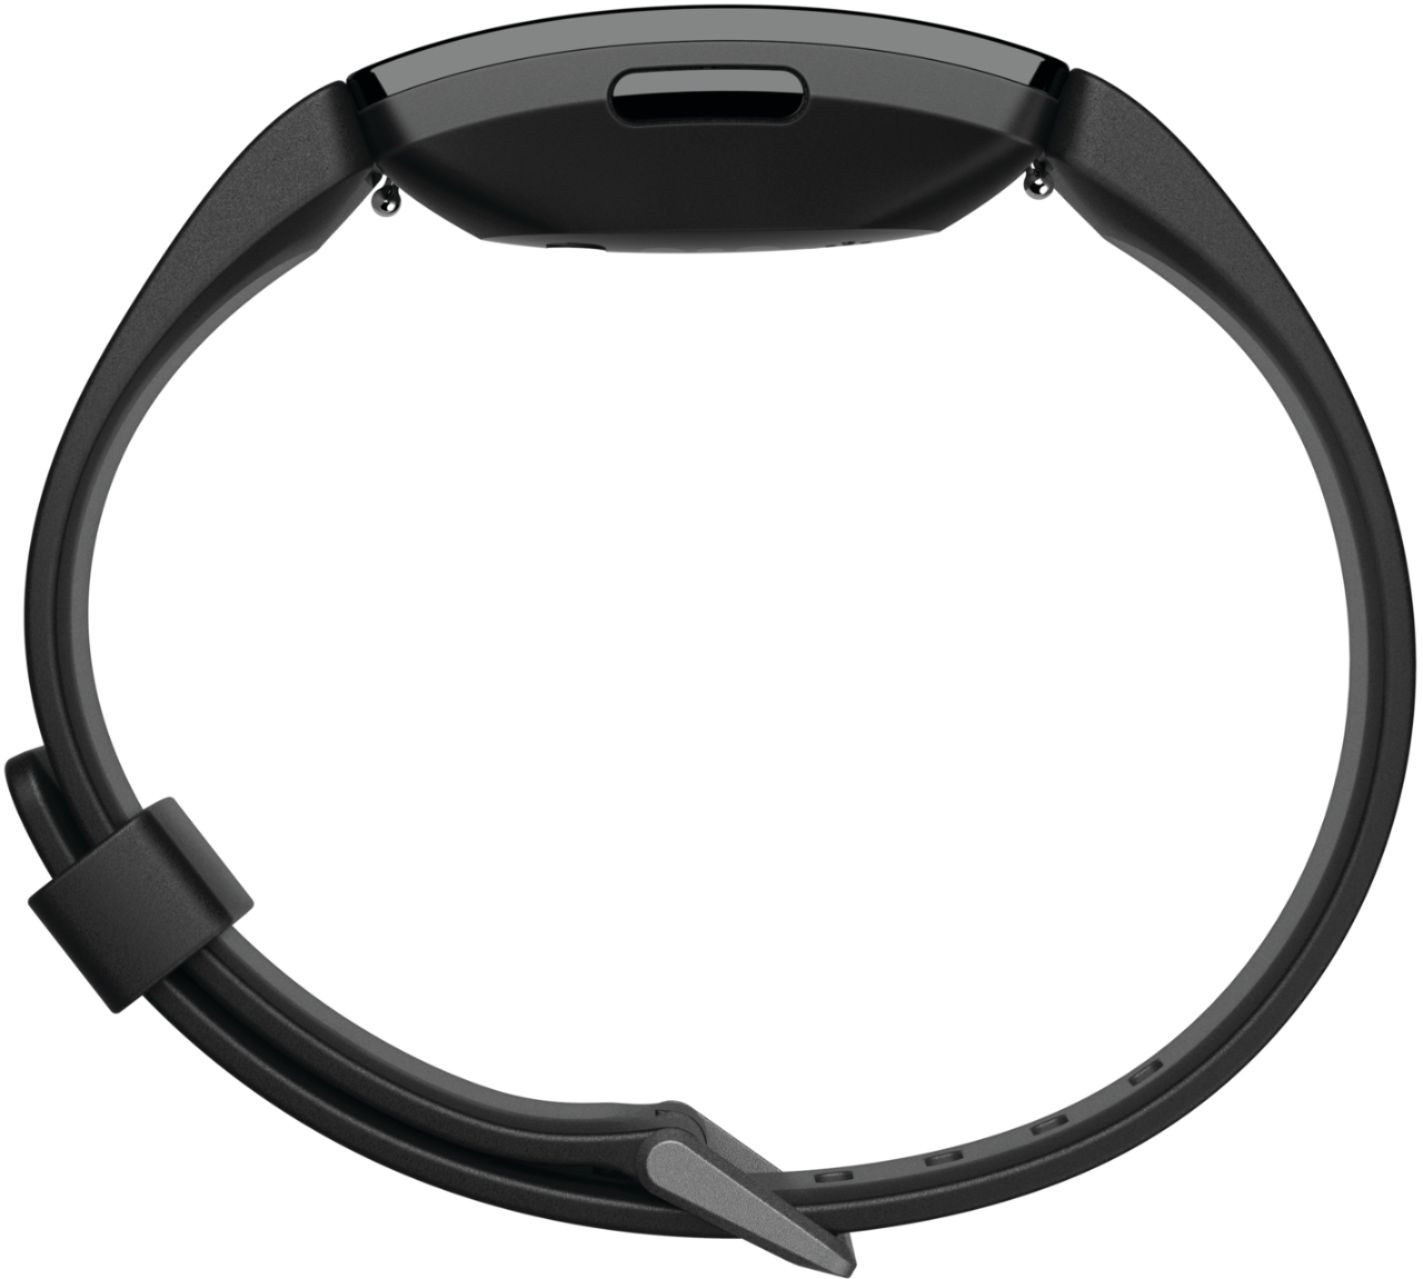 for sale online Black Fitbit Inspire HR Fitness Tracker FB413BKBK 